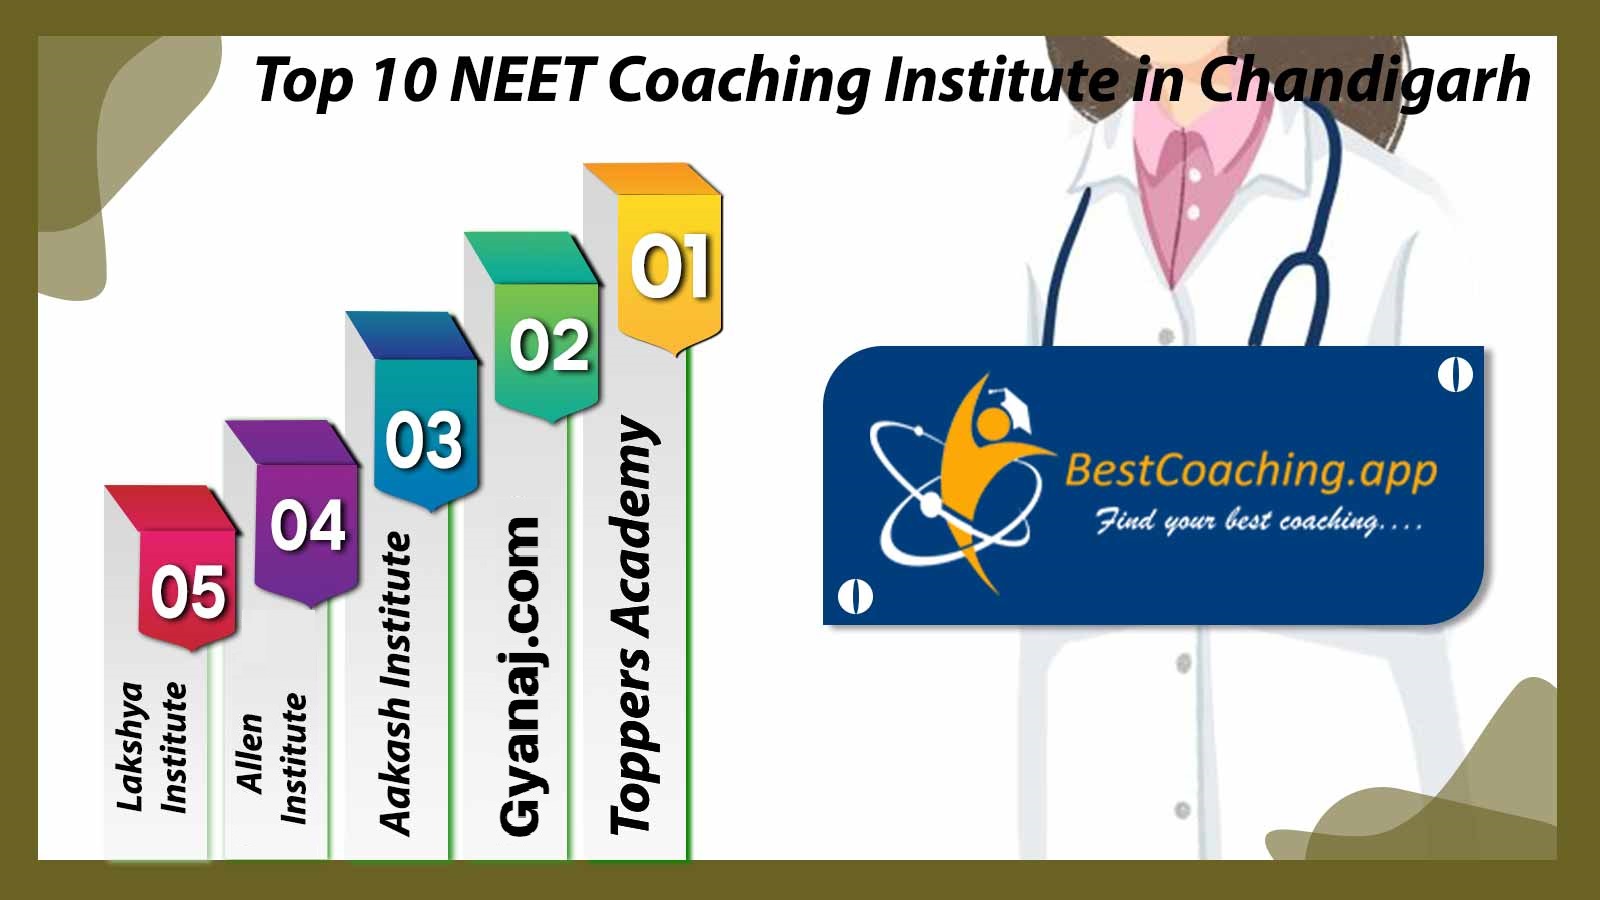 Top 10 NEET Coaching Institute in Chandigarh